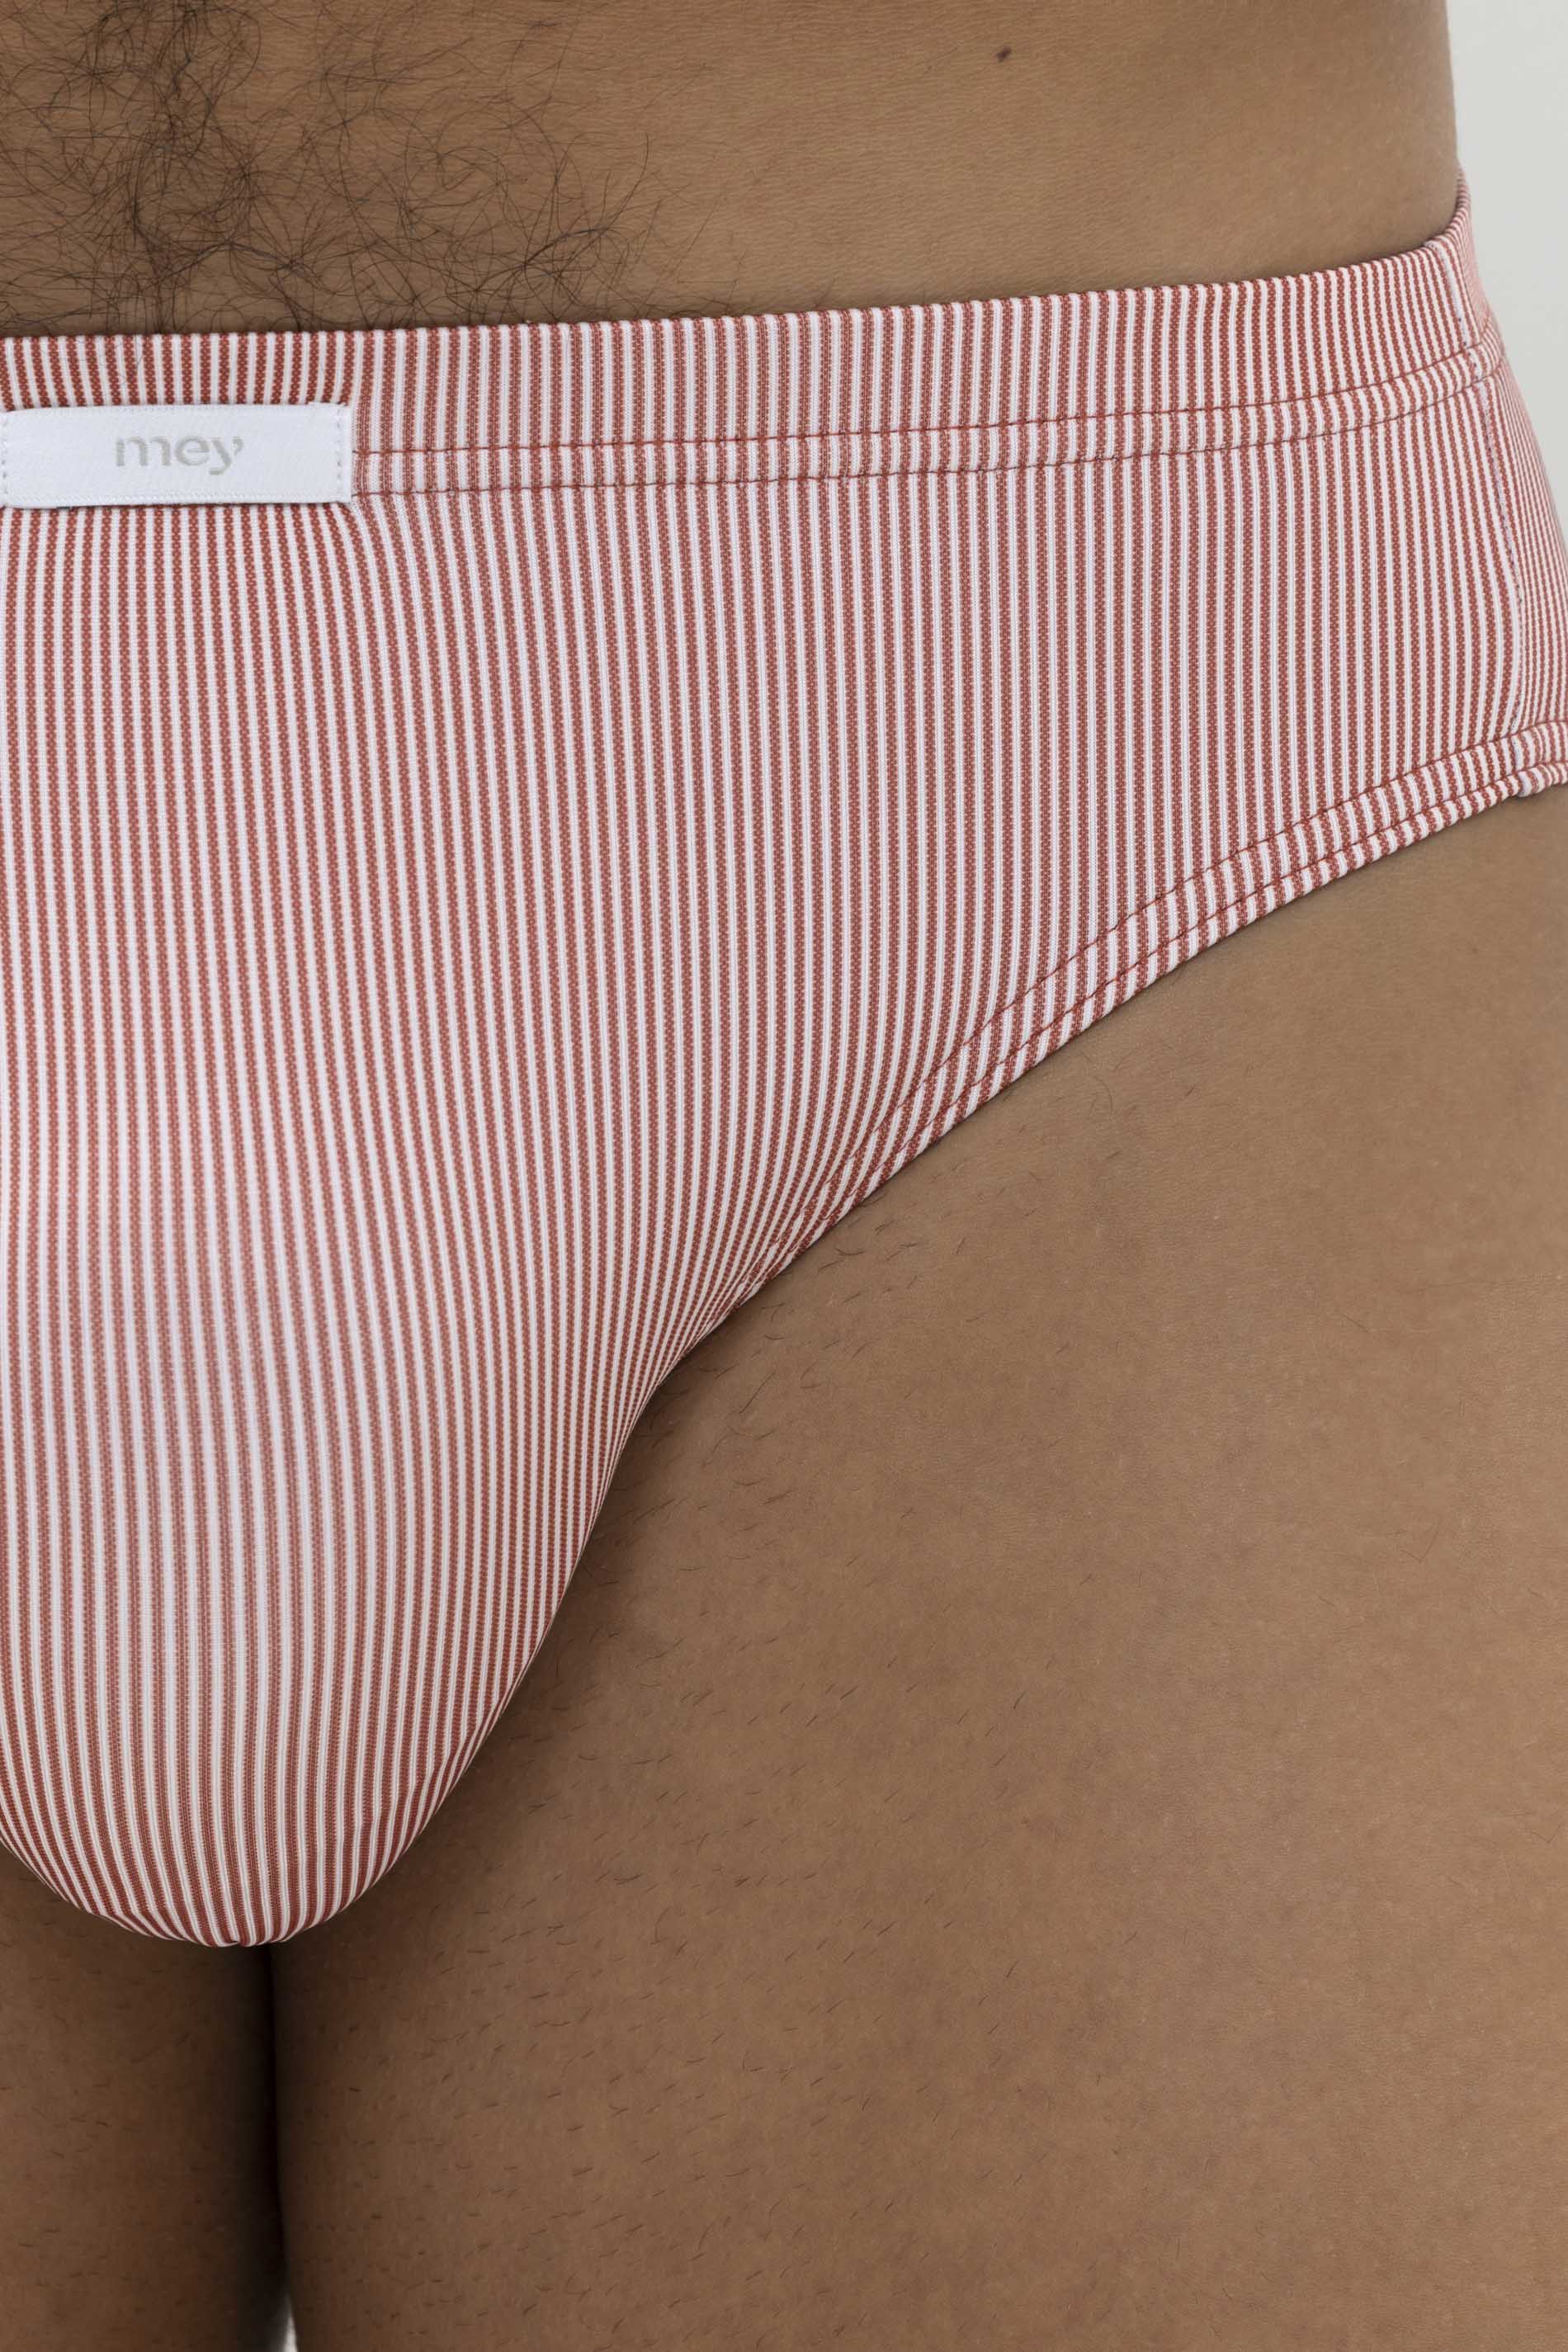 Jazz Pants Serie Needle Stripes Detailansicht 02 | mey®